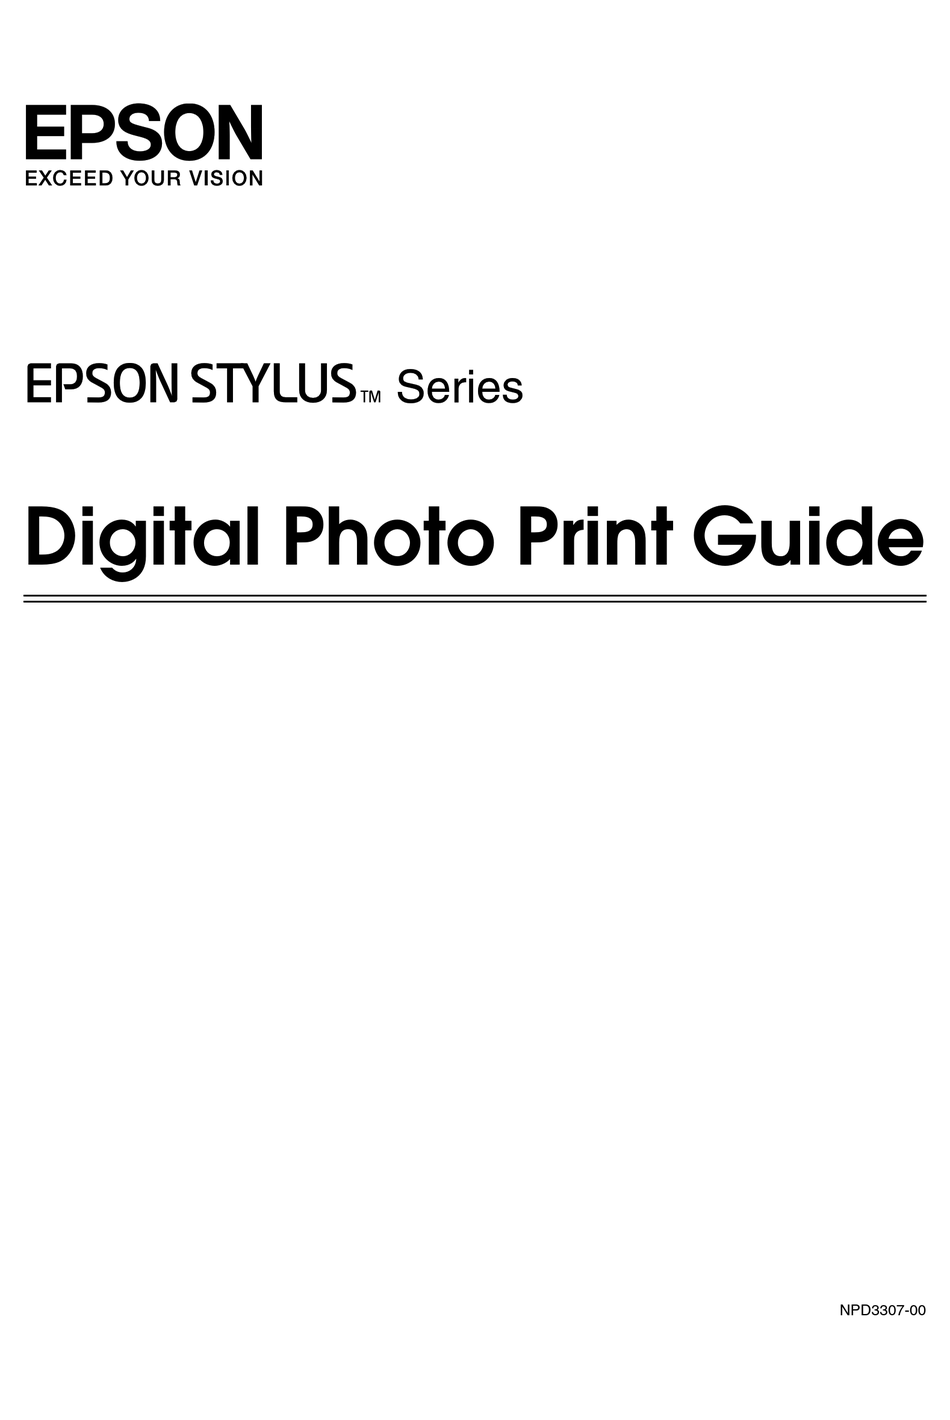 Epson Stylus Series Manual Pdf Download Manualslib 9494